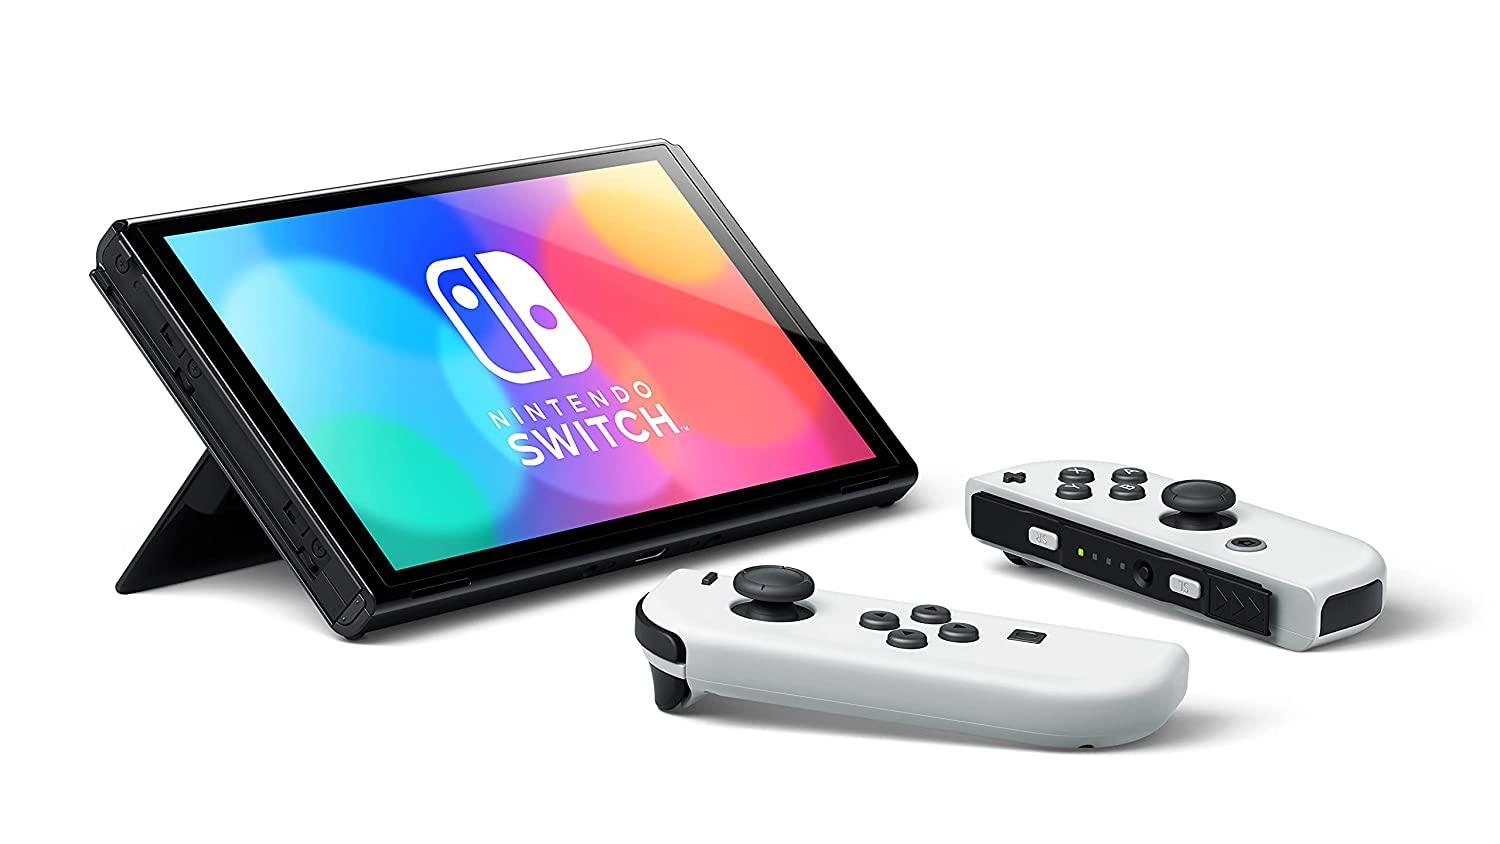 Nintendo Switch : Une mémoire interne trop juste, uitlisez une